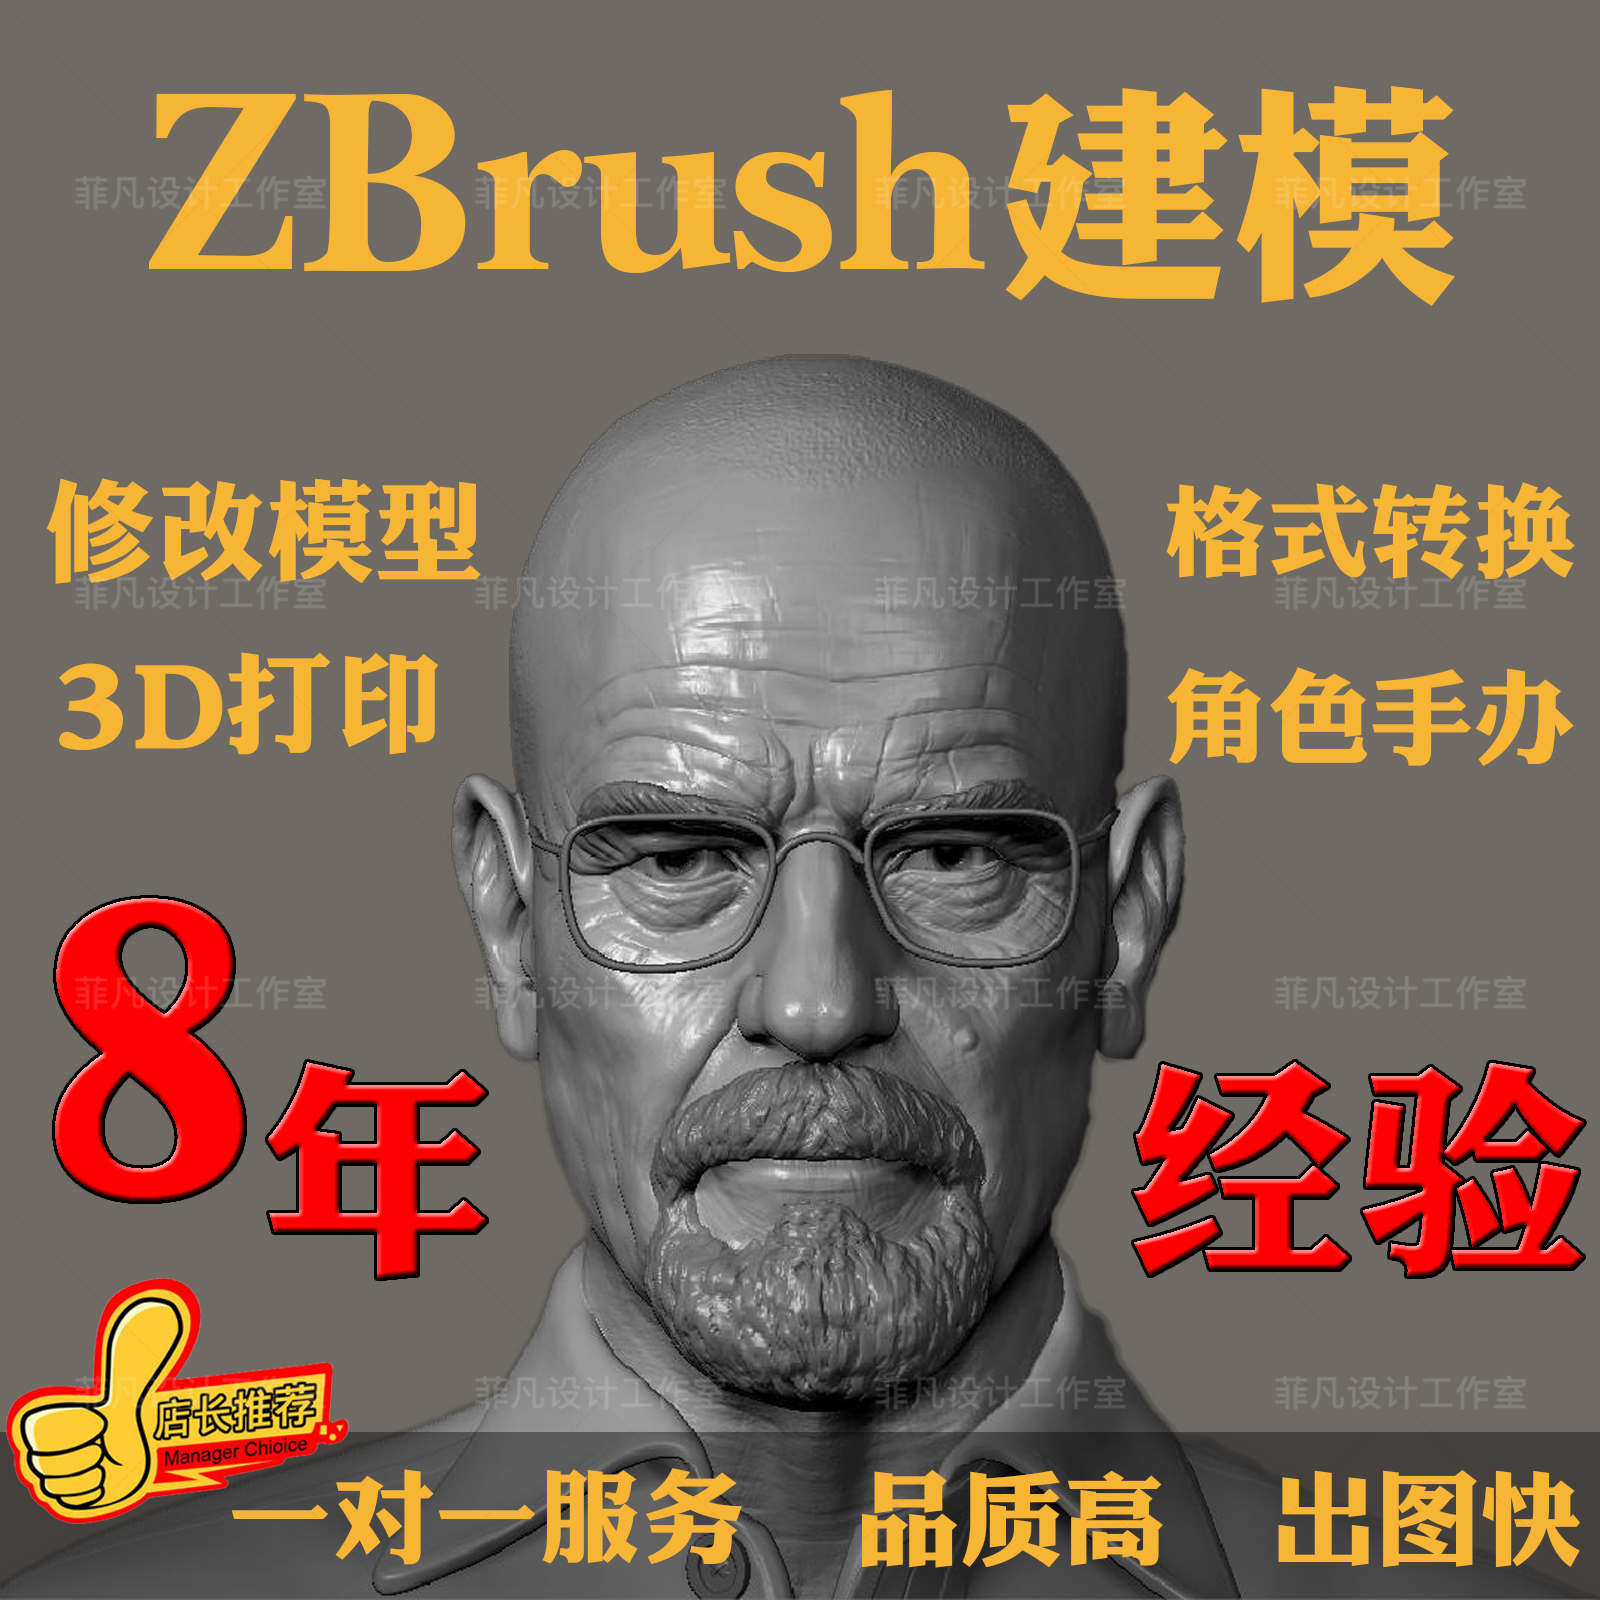 ZBrush建模 STL修图 修改模型 3D建模 ZB建模 代画代做接图